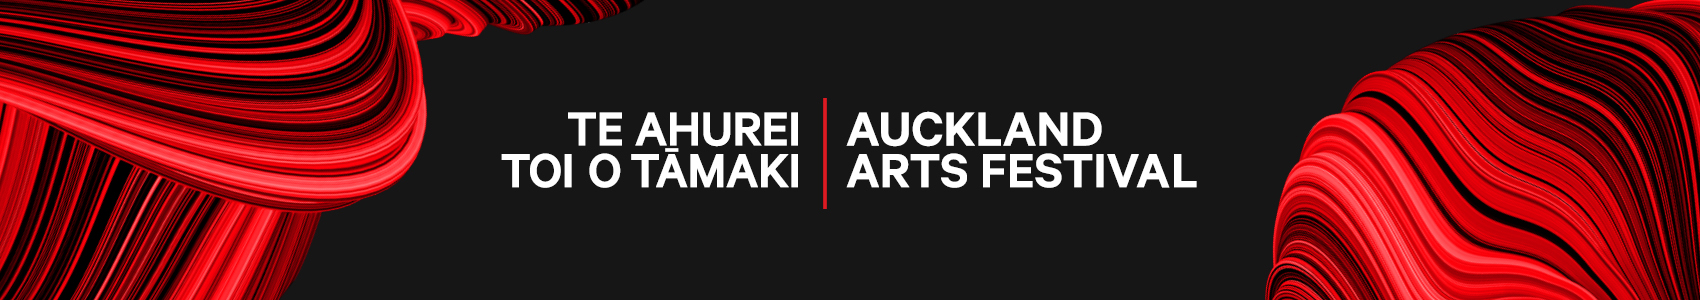 Auckland Arts Festival - Te Ahurei Toi o Tāmaki